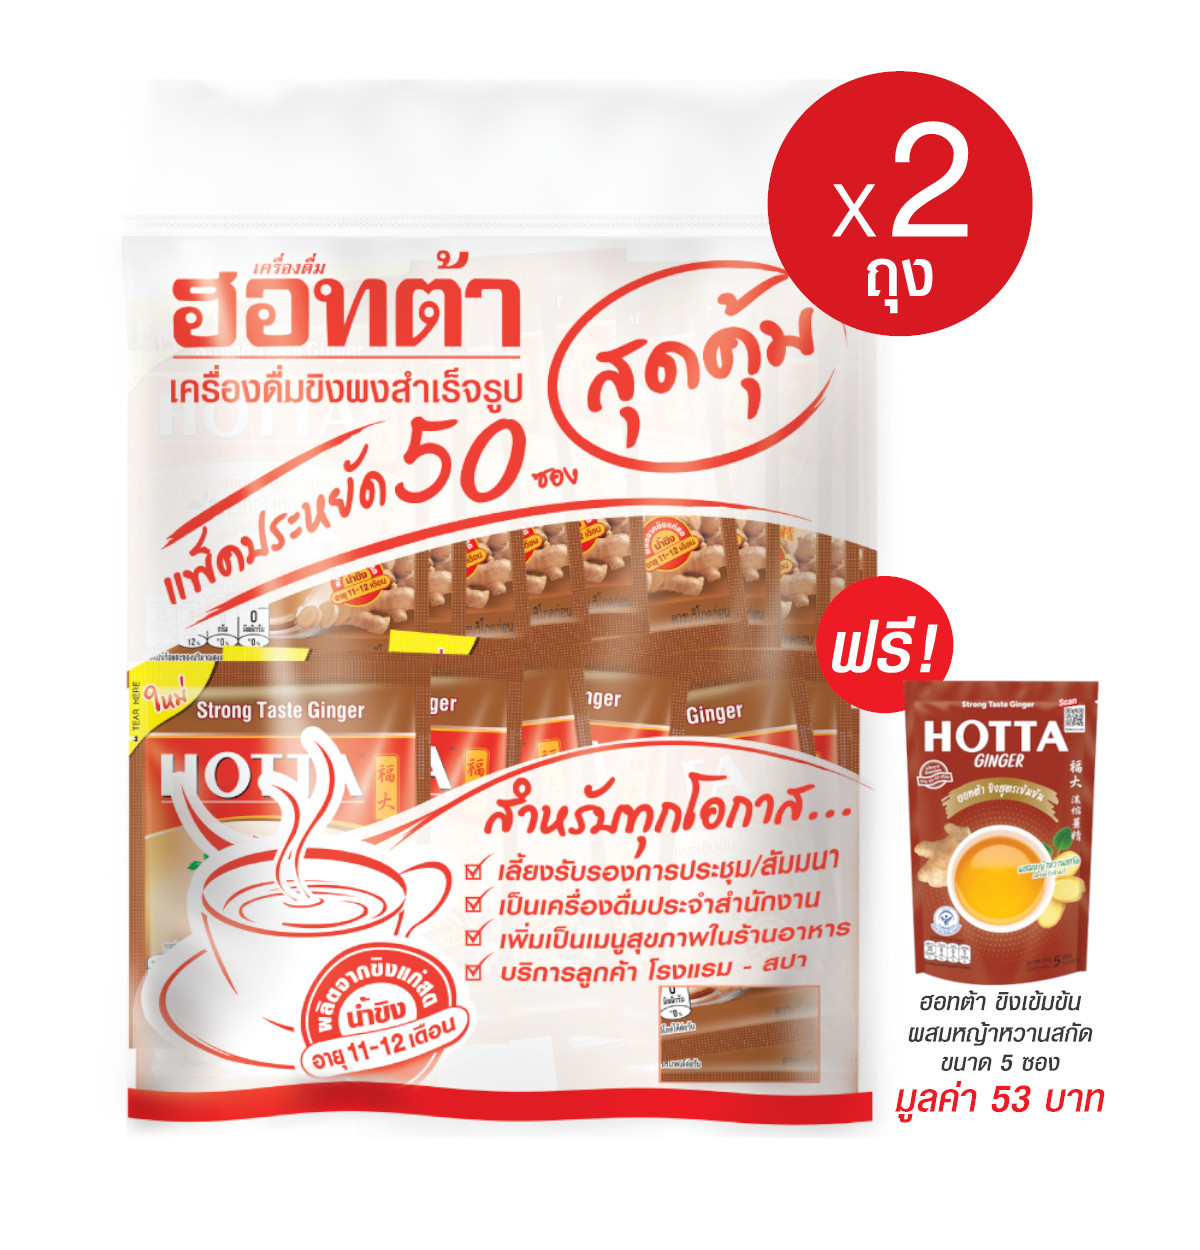 HOTTA Instant Ginger with Stevia Extract Strong Taste Formula 9g., 50 Sachets, 2 Packs (Free 5 Sticks)